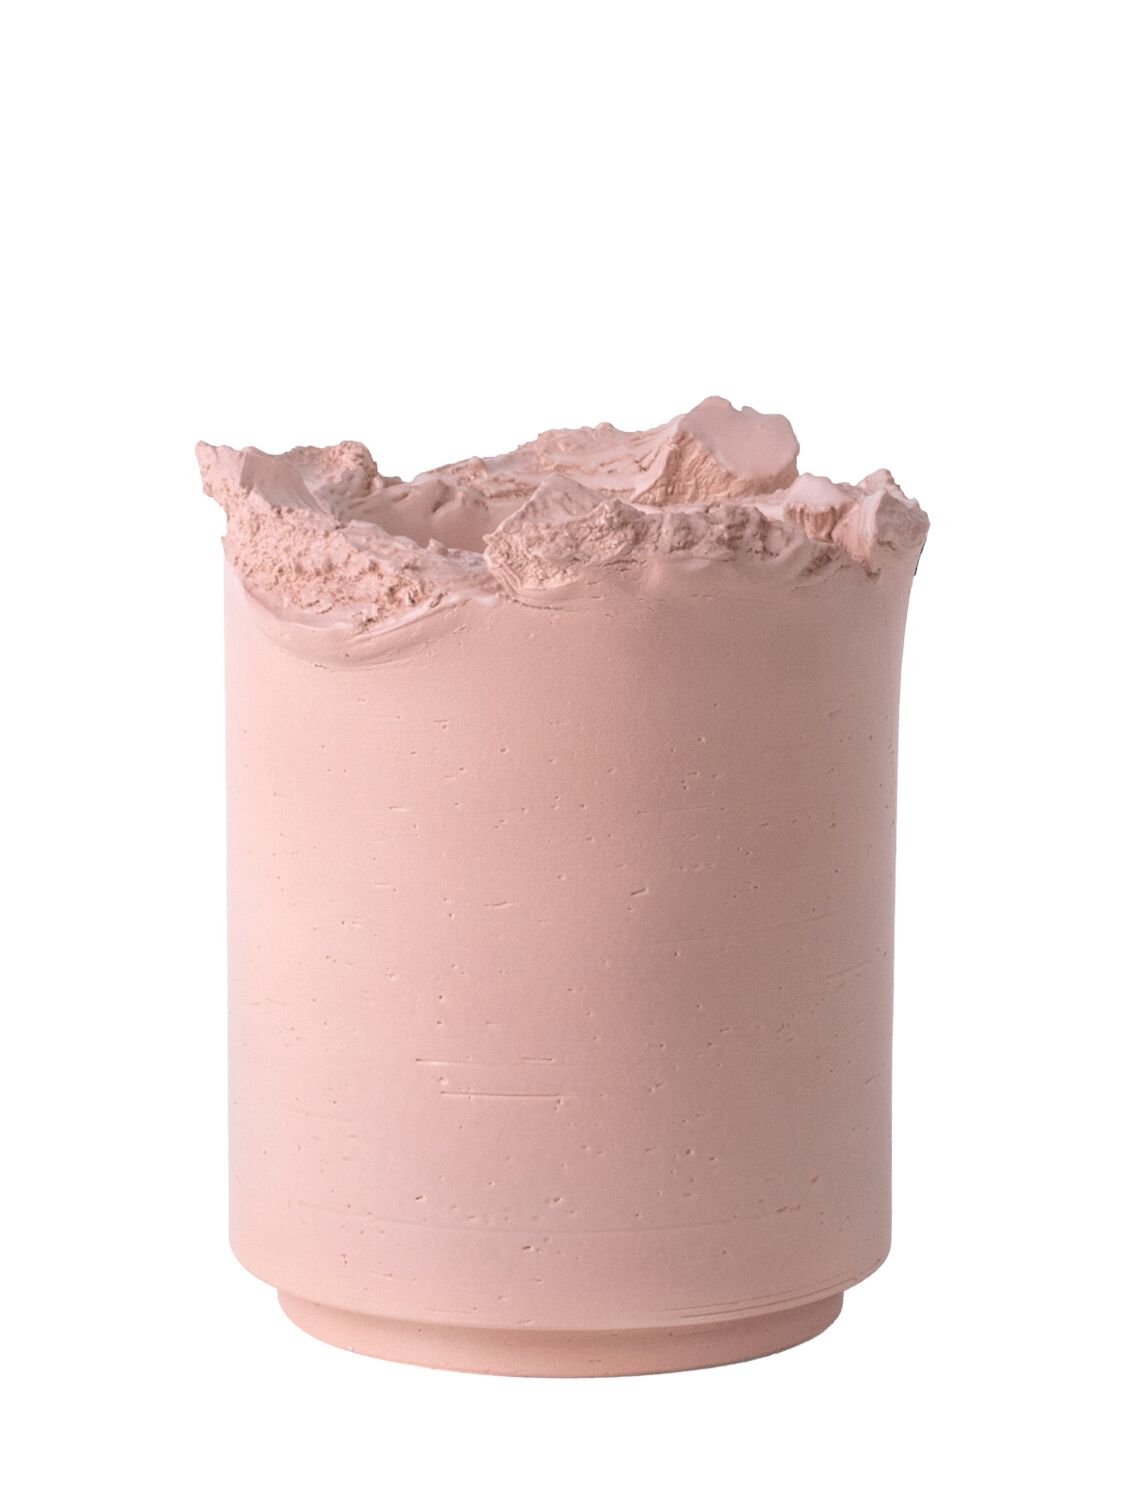 Bitossi Ceramiche Formafantasma Clay Vase In Pink